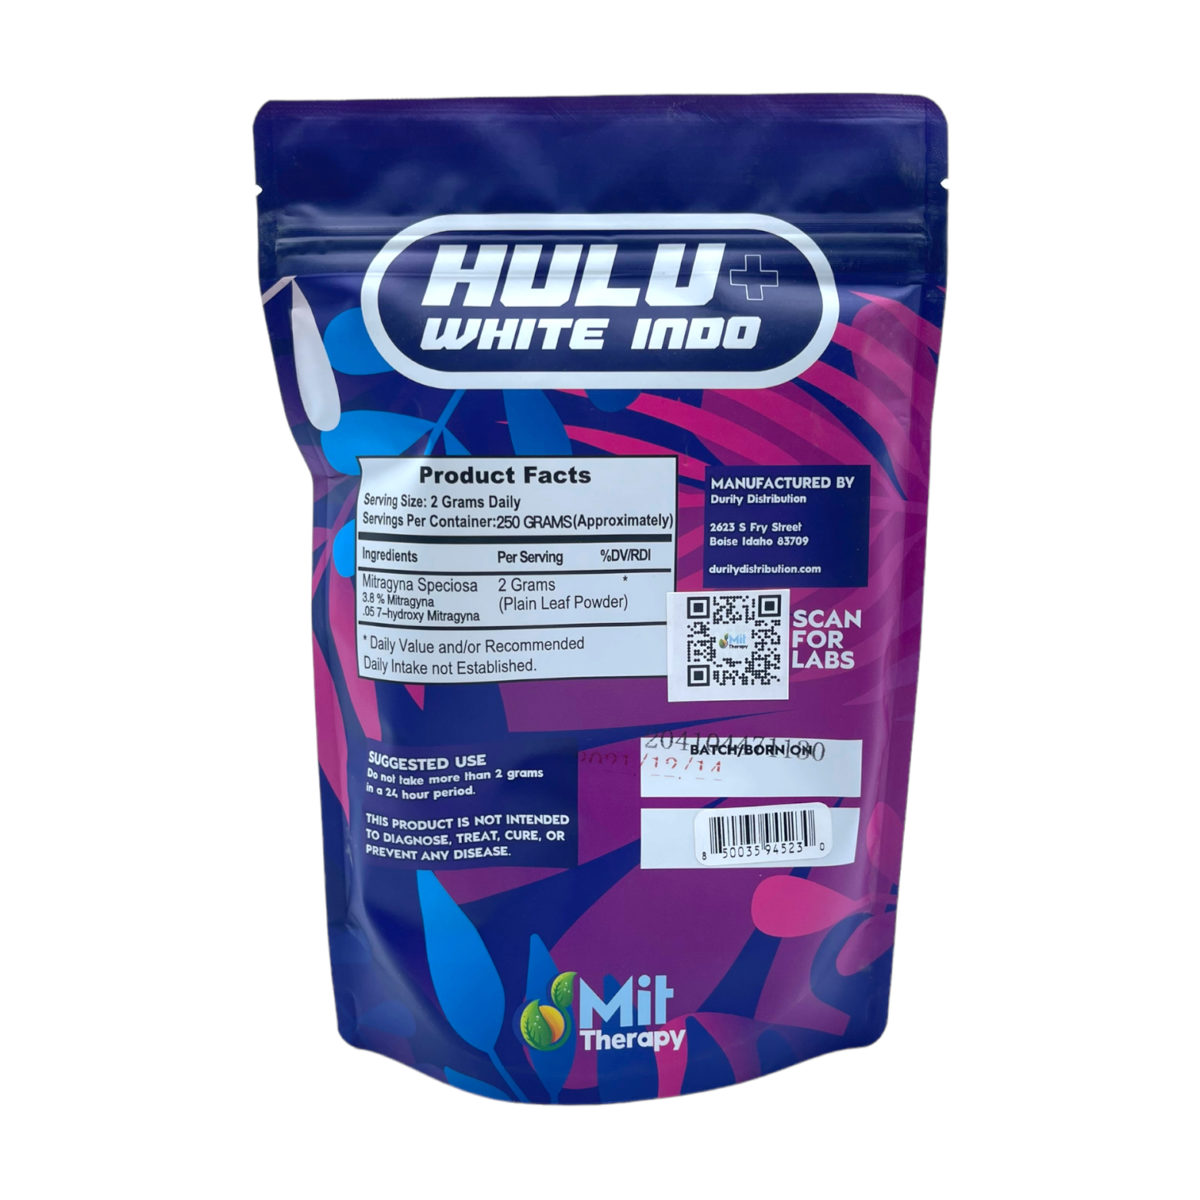 MIT Therapy Hulu White Indo Extract Enhanced Kratom Powder